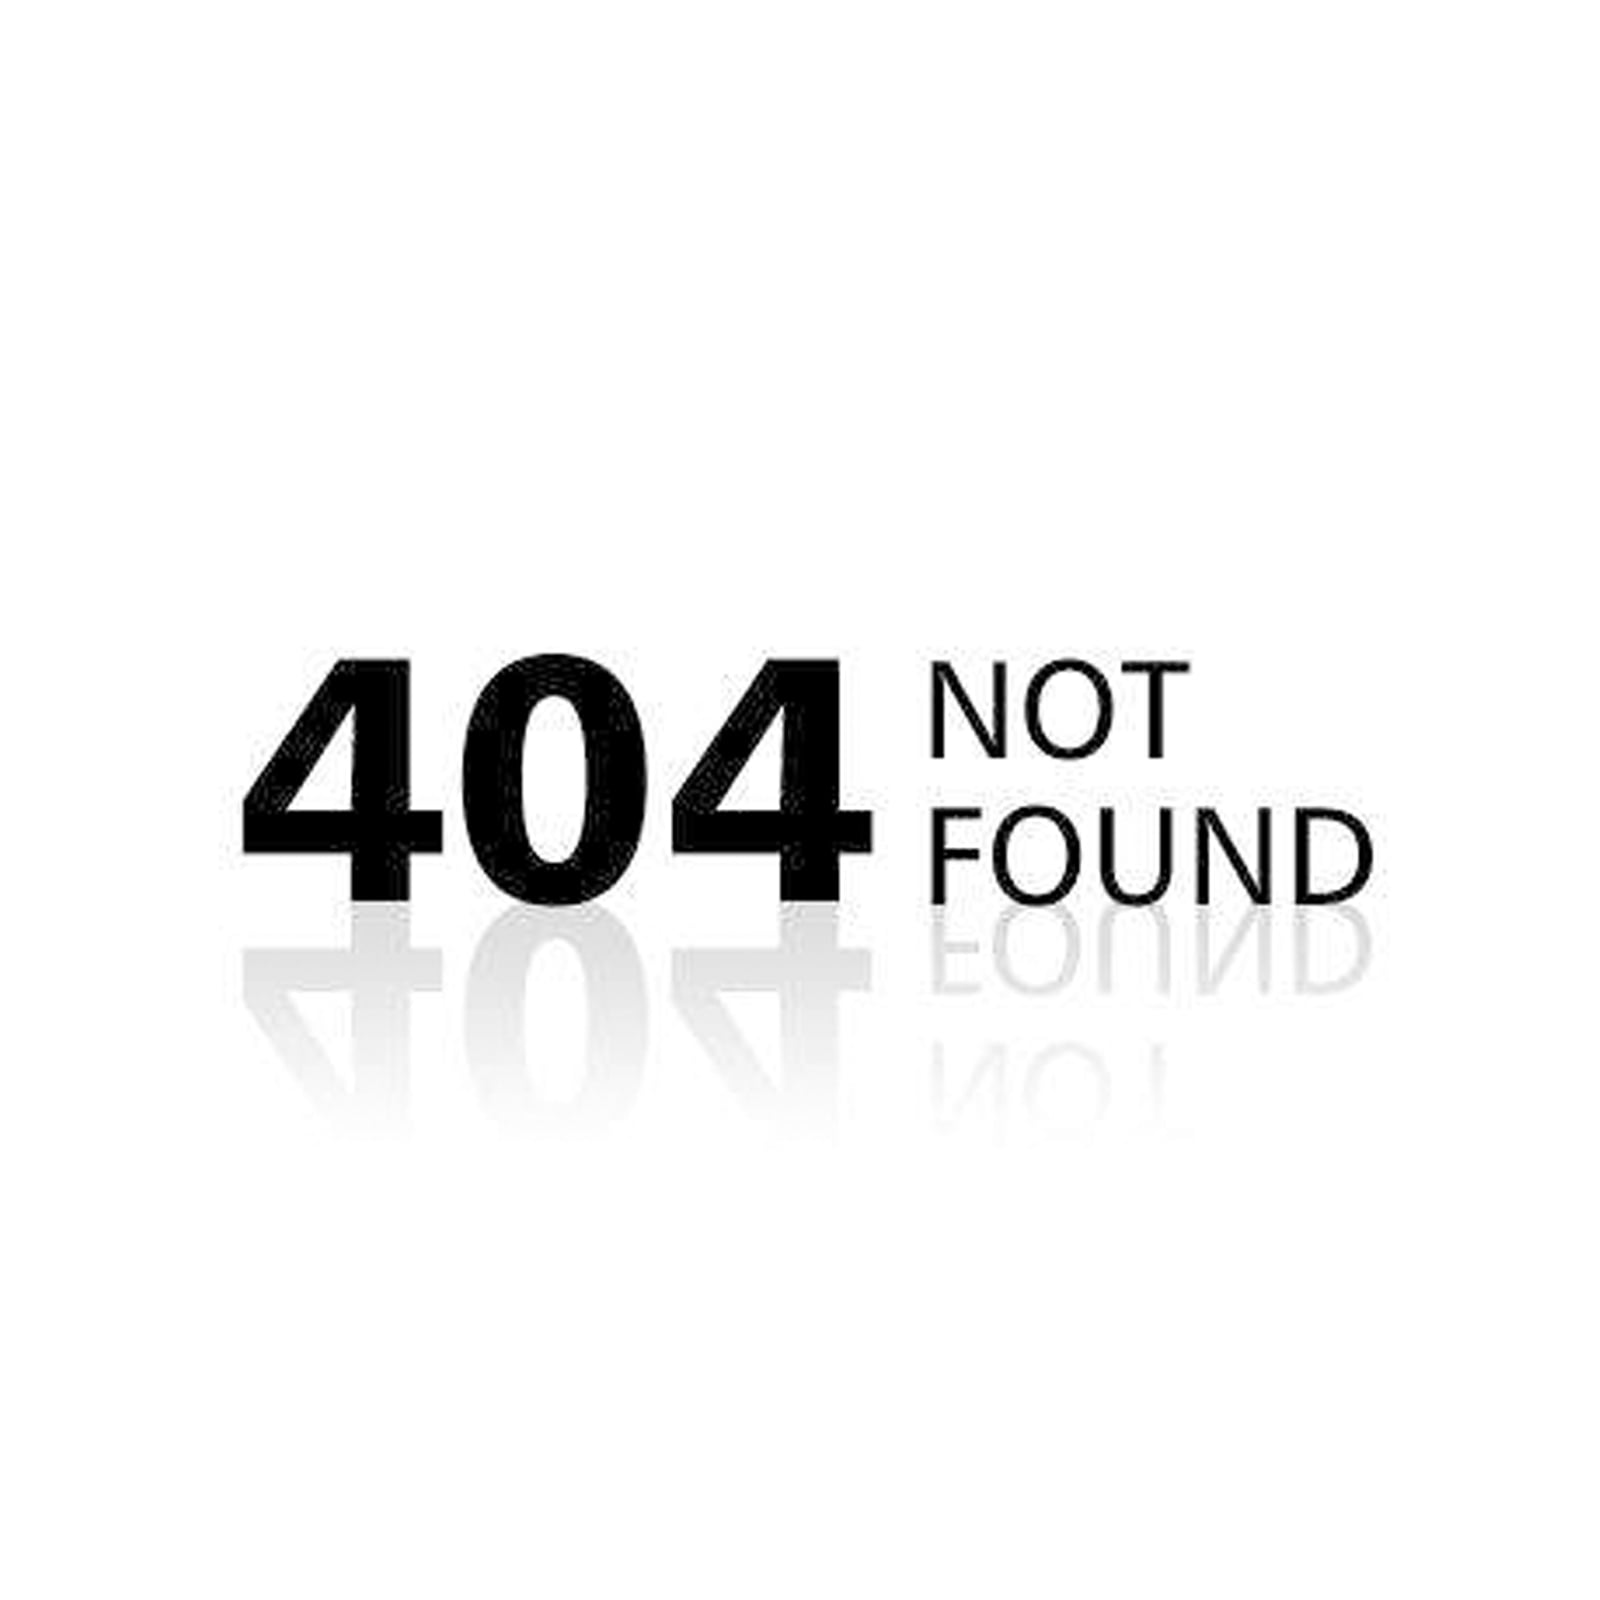 Not found icon. 404 Not found. Логотип 404. 404 Not found картинка. Not found без фона.